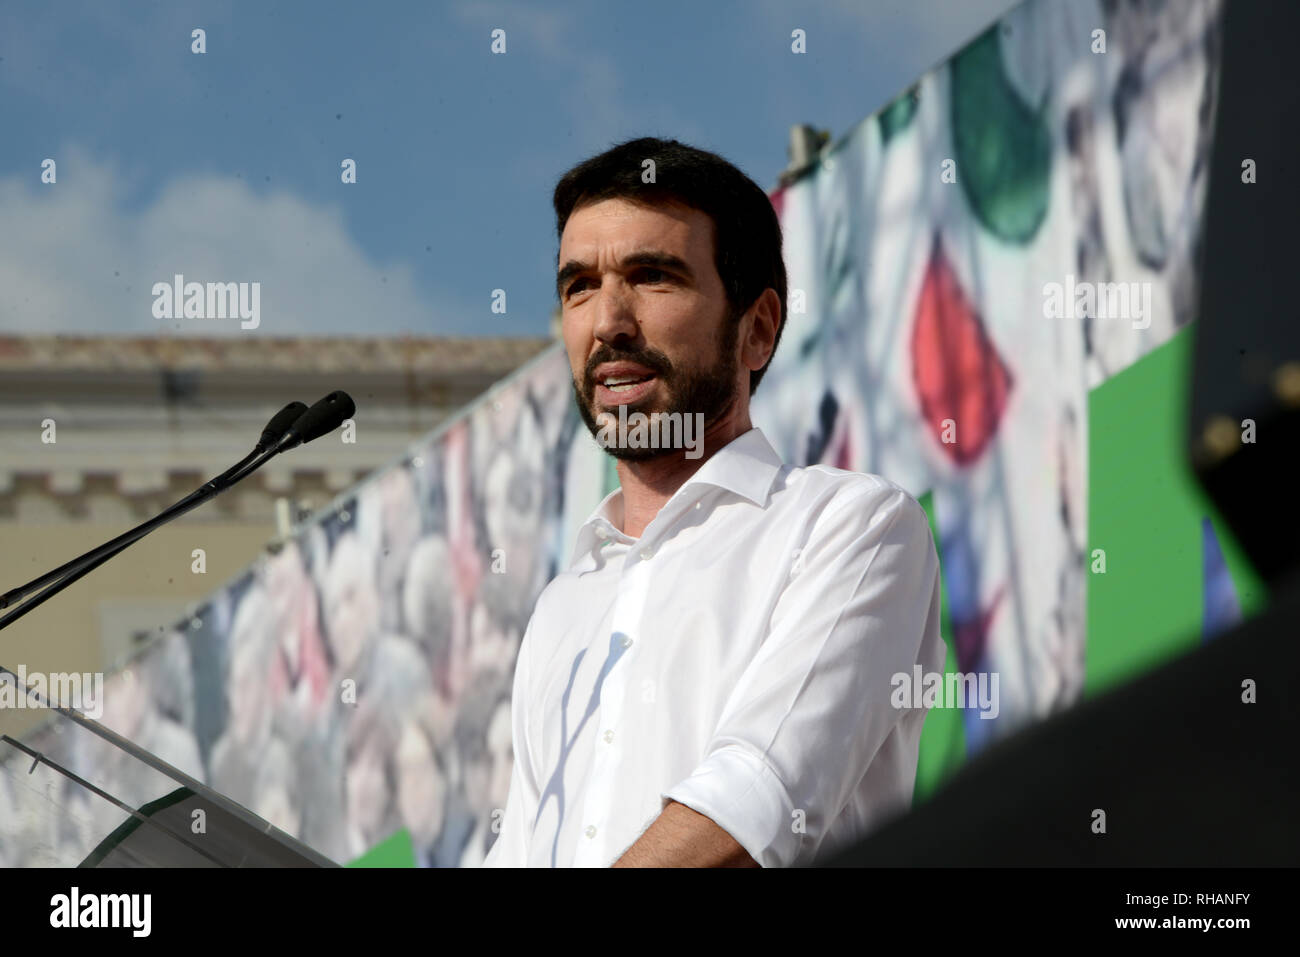 Roma - Septiembre 30, 2018: El exponente del partido democrático italiano Maurizio Martina, durante el evento "Per un'Italia che non ha paura". Foto de stock